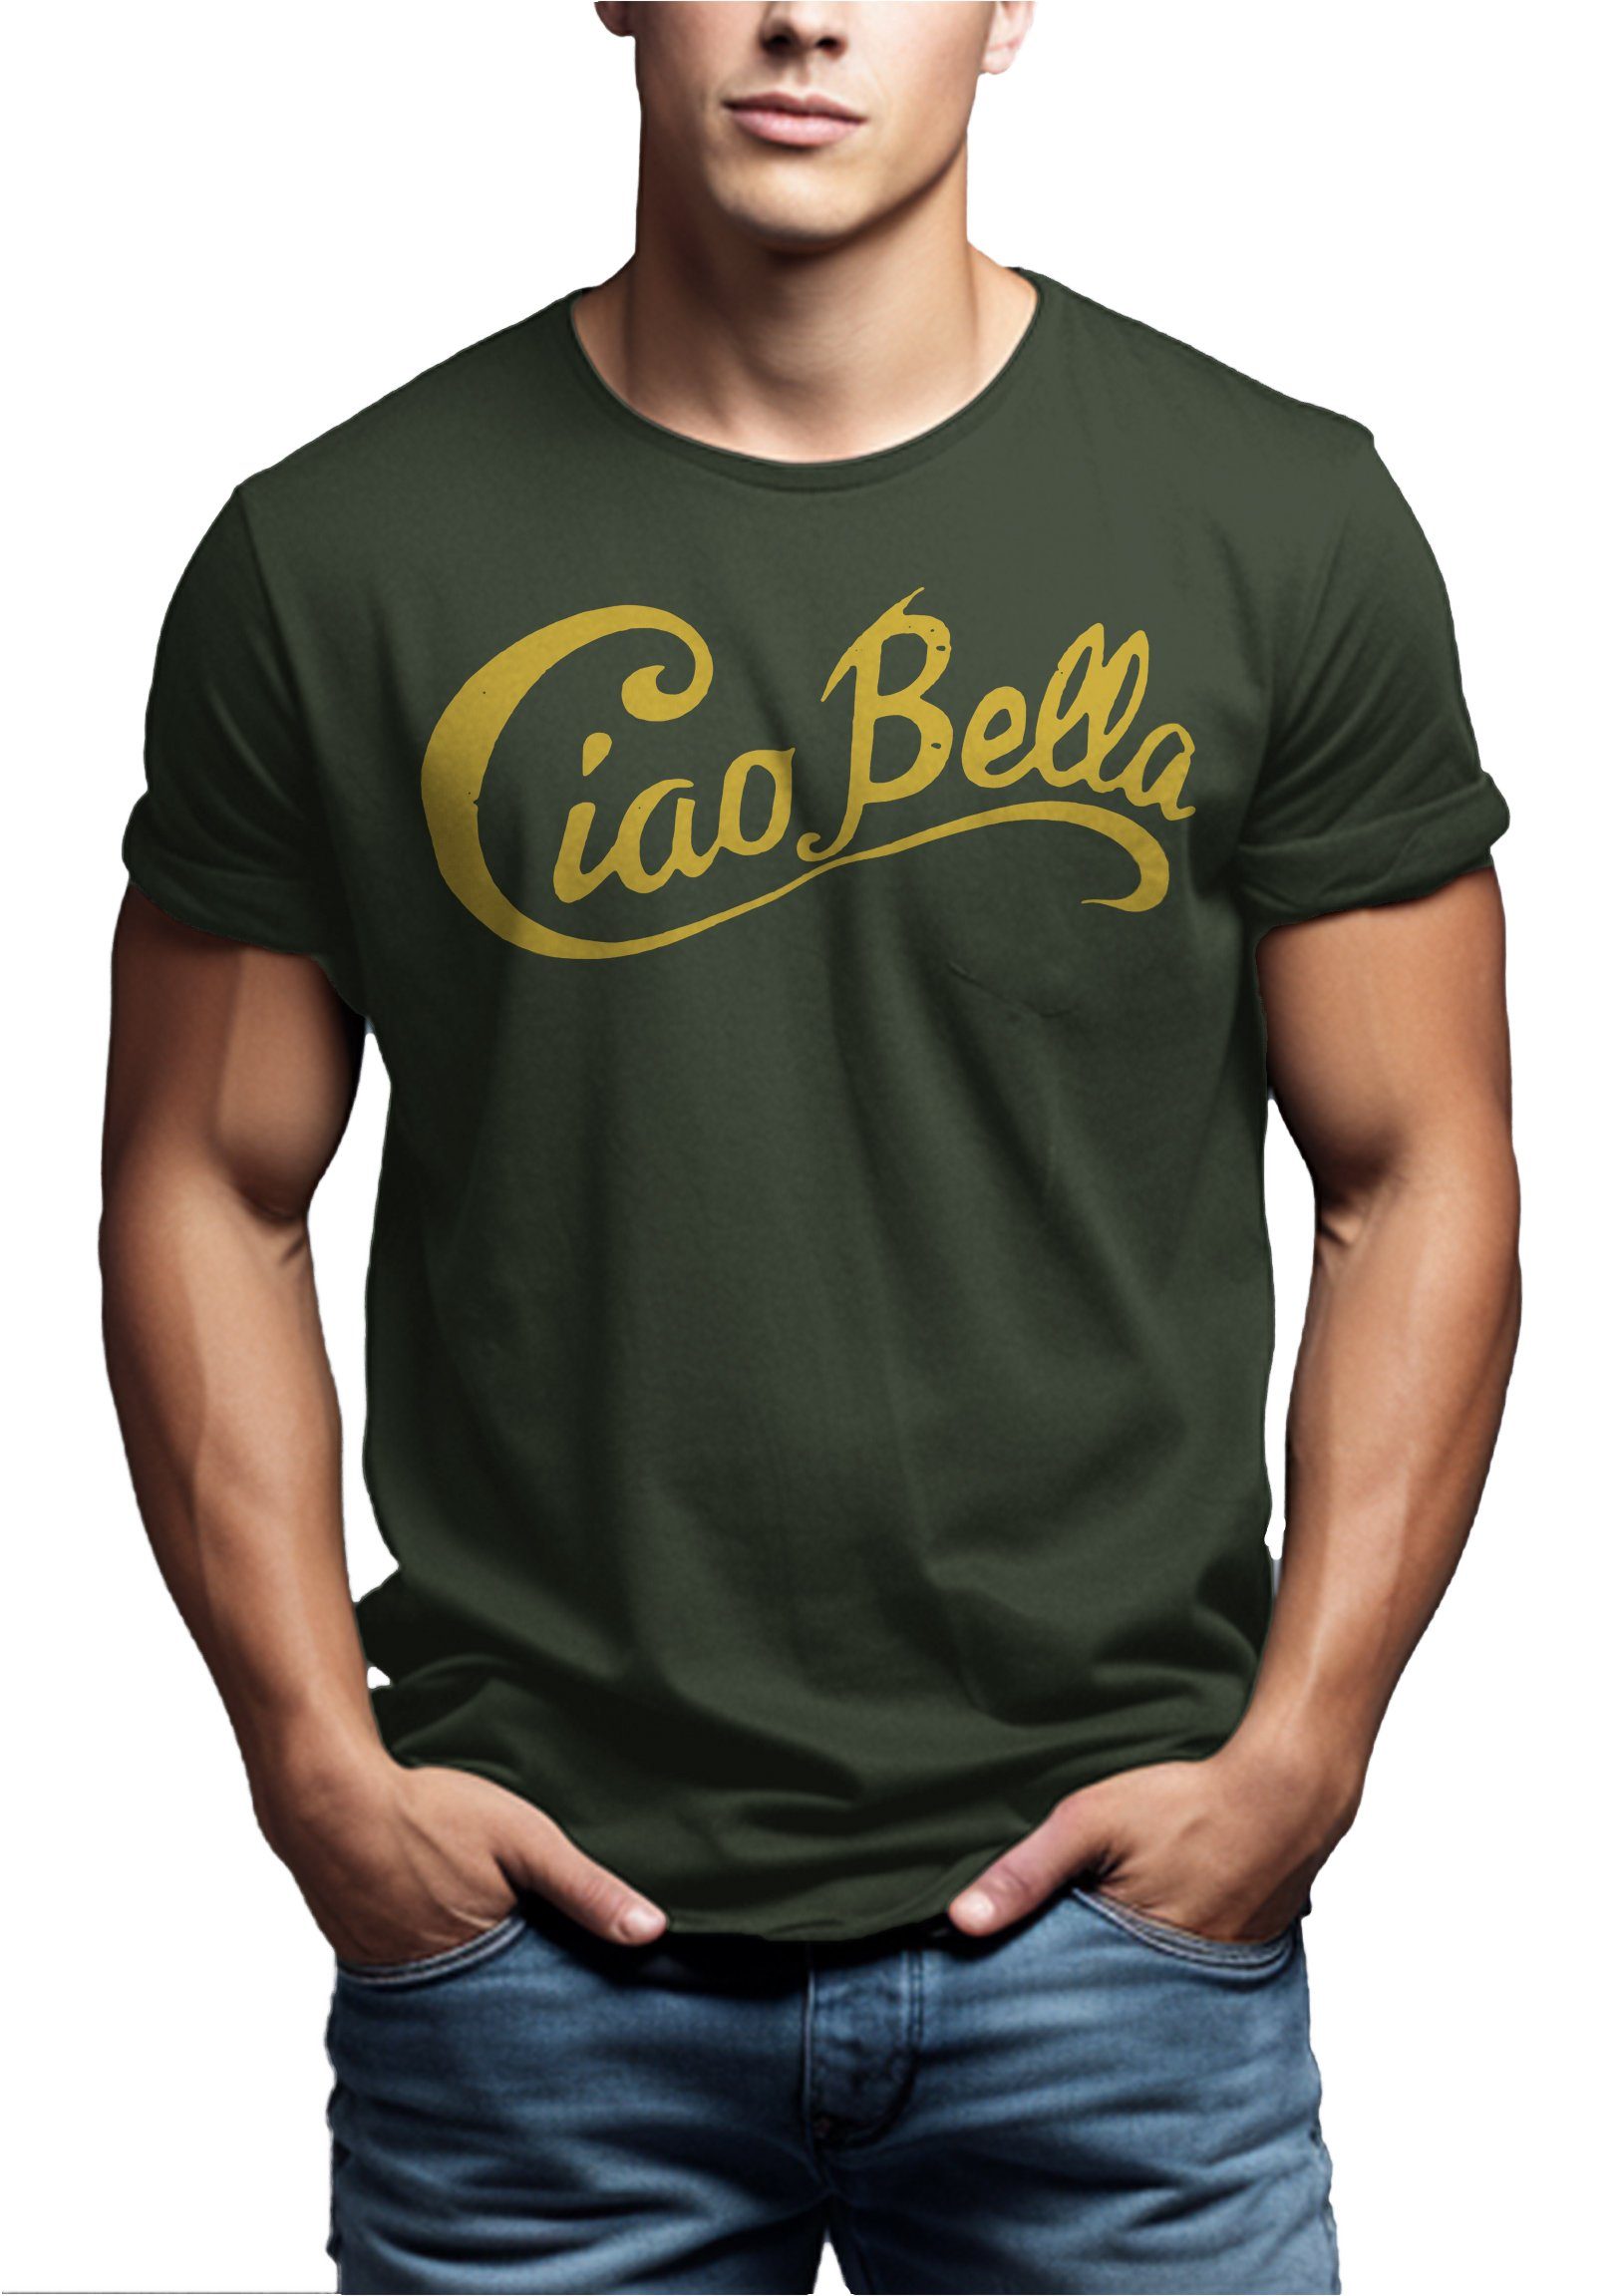 MAKAYA Print-Shirt Herren Italienischer Spruch Mode Motiv Ciao Bella Coole Grün Italien Logo, Style